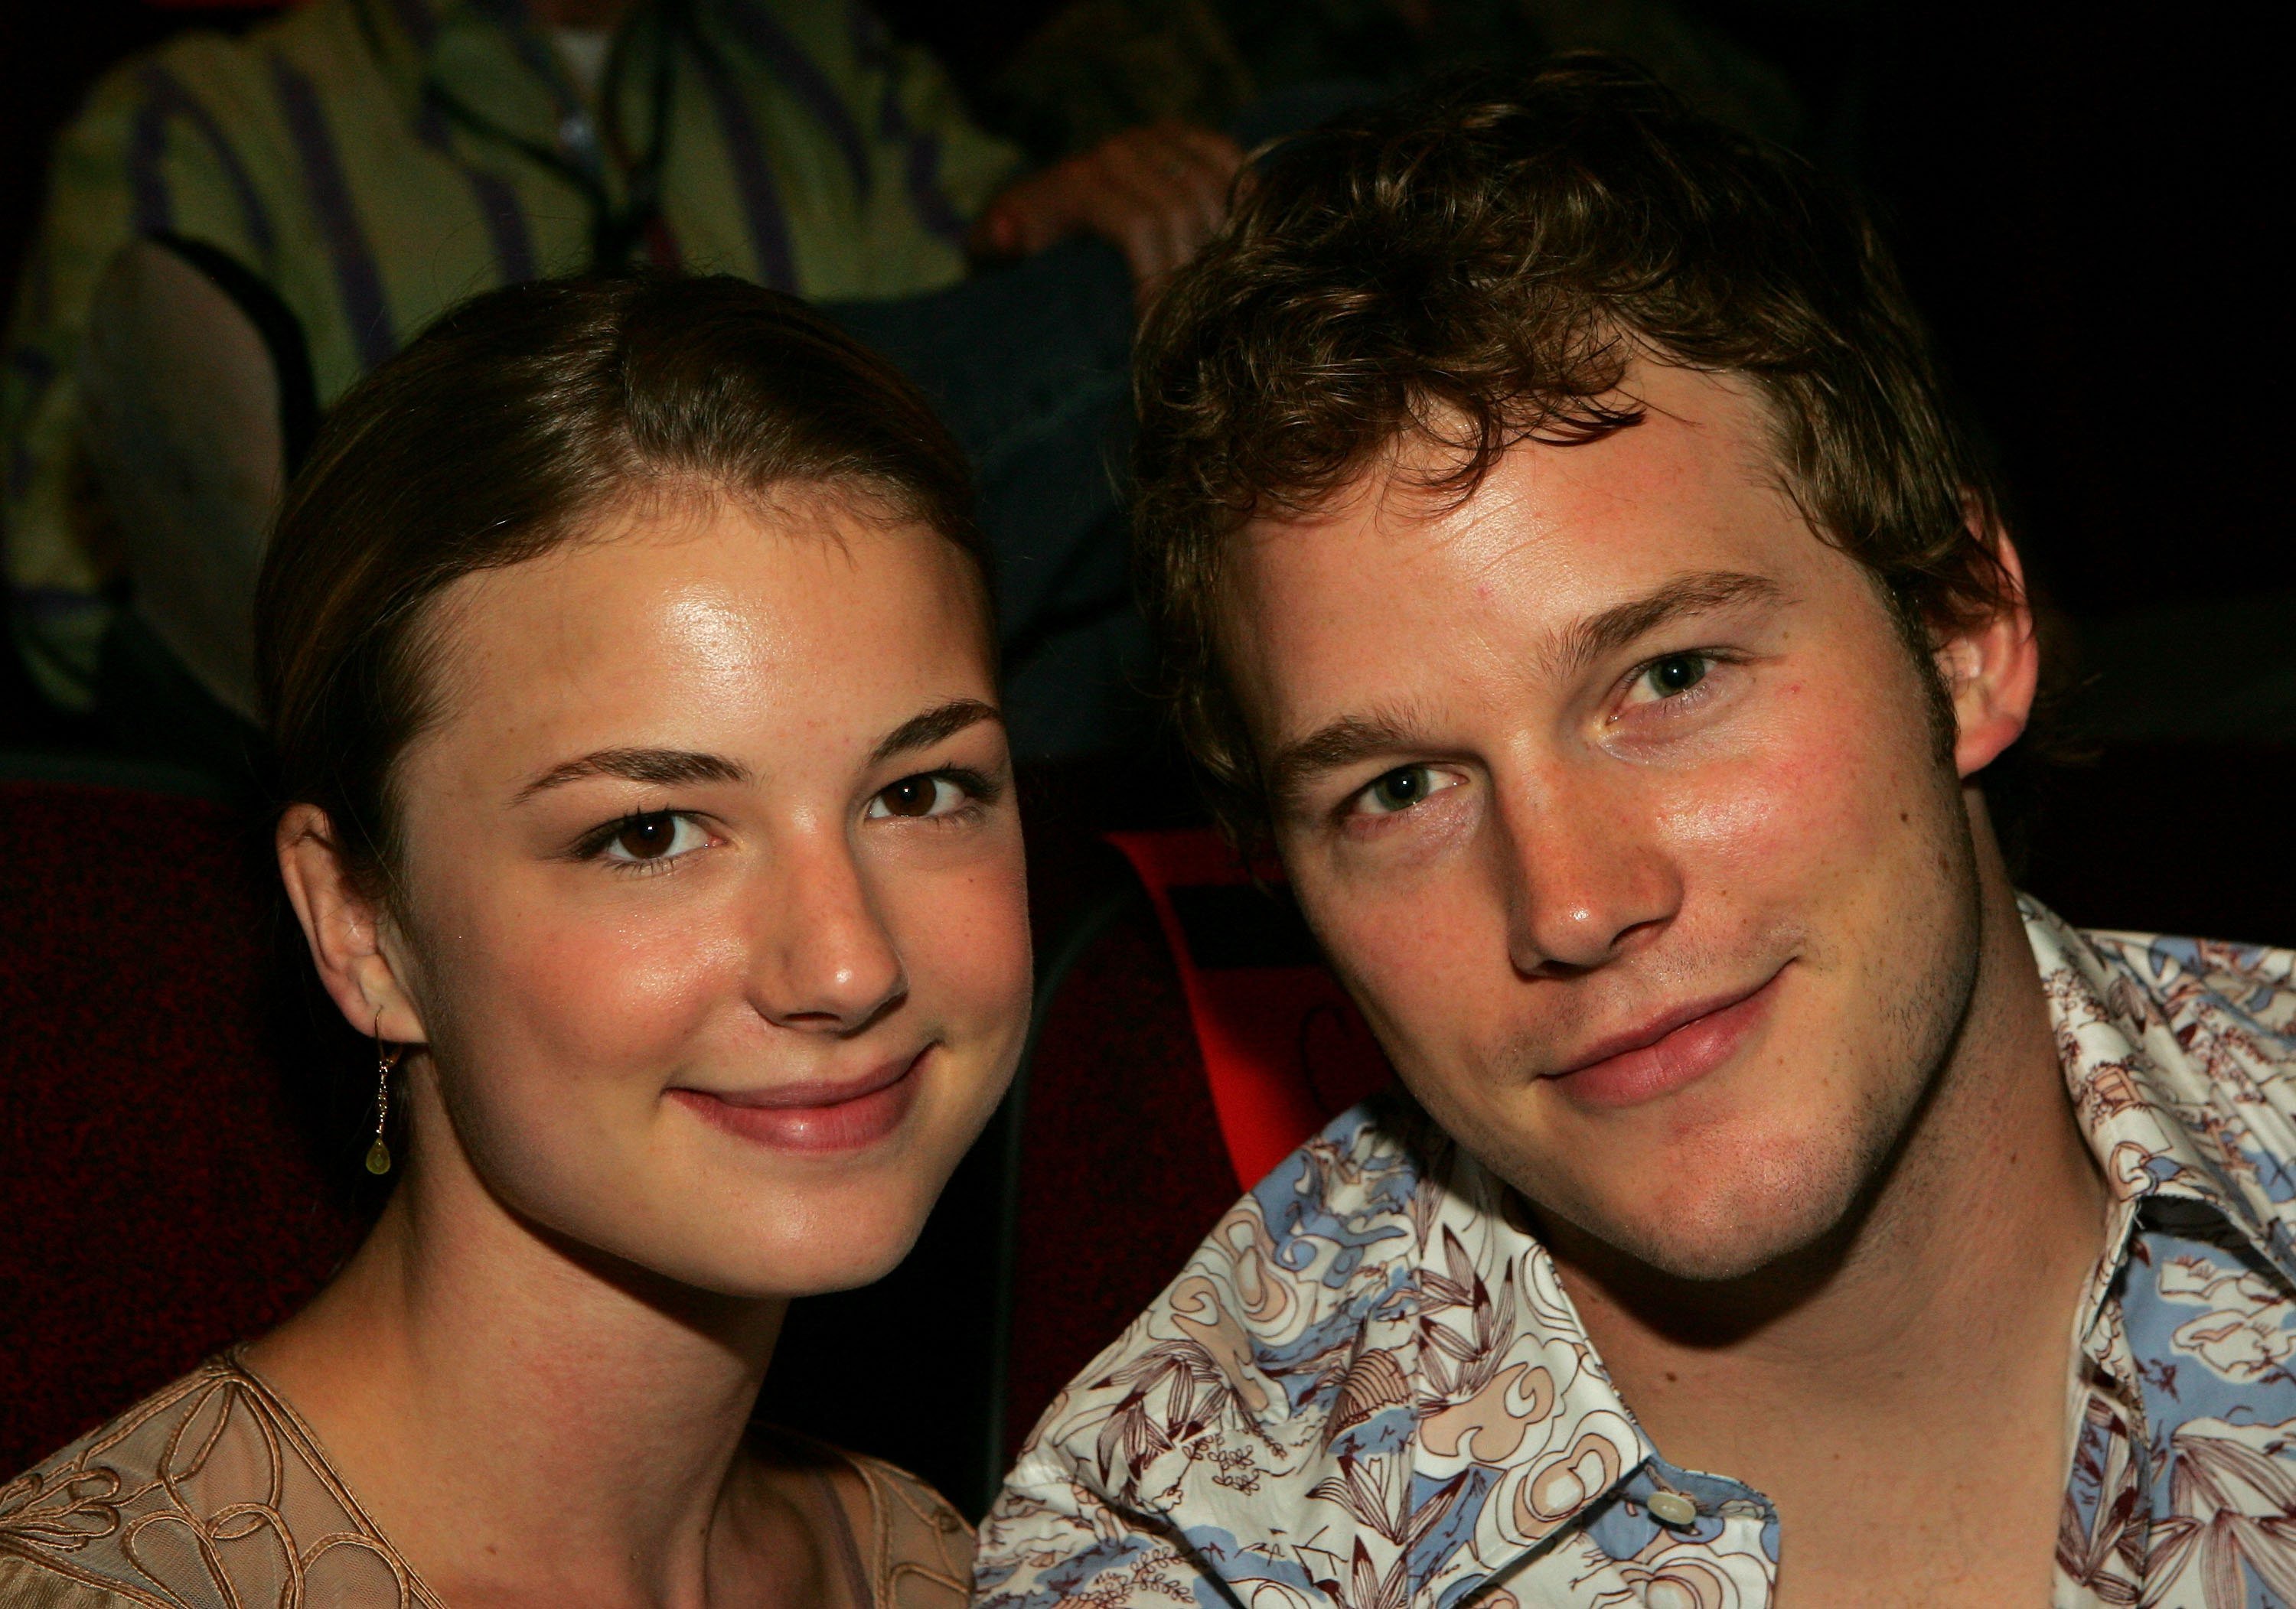 Emily VanCamp and Chris Pratt on June 9, 2006 in Las Vegas, Nevada.